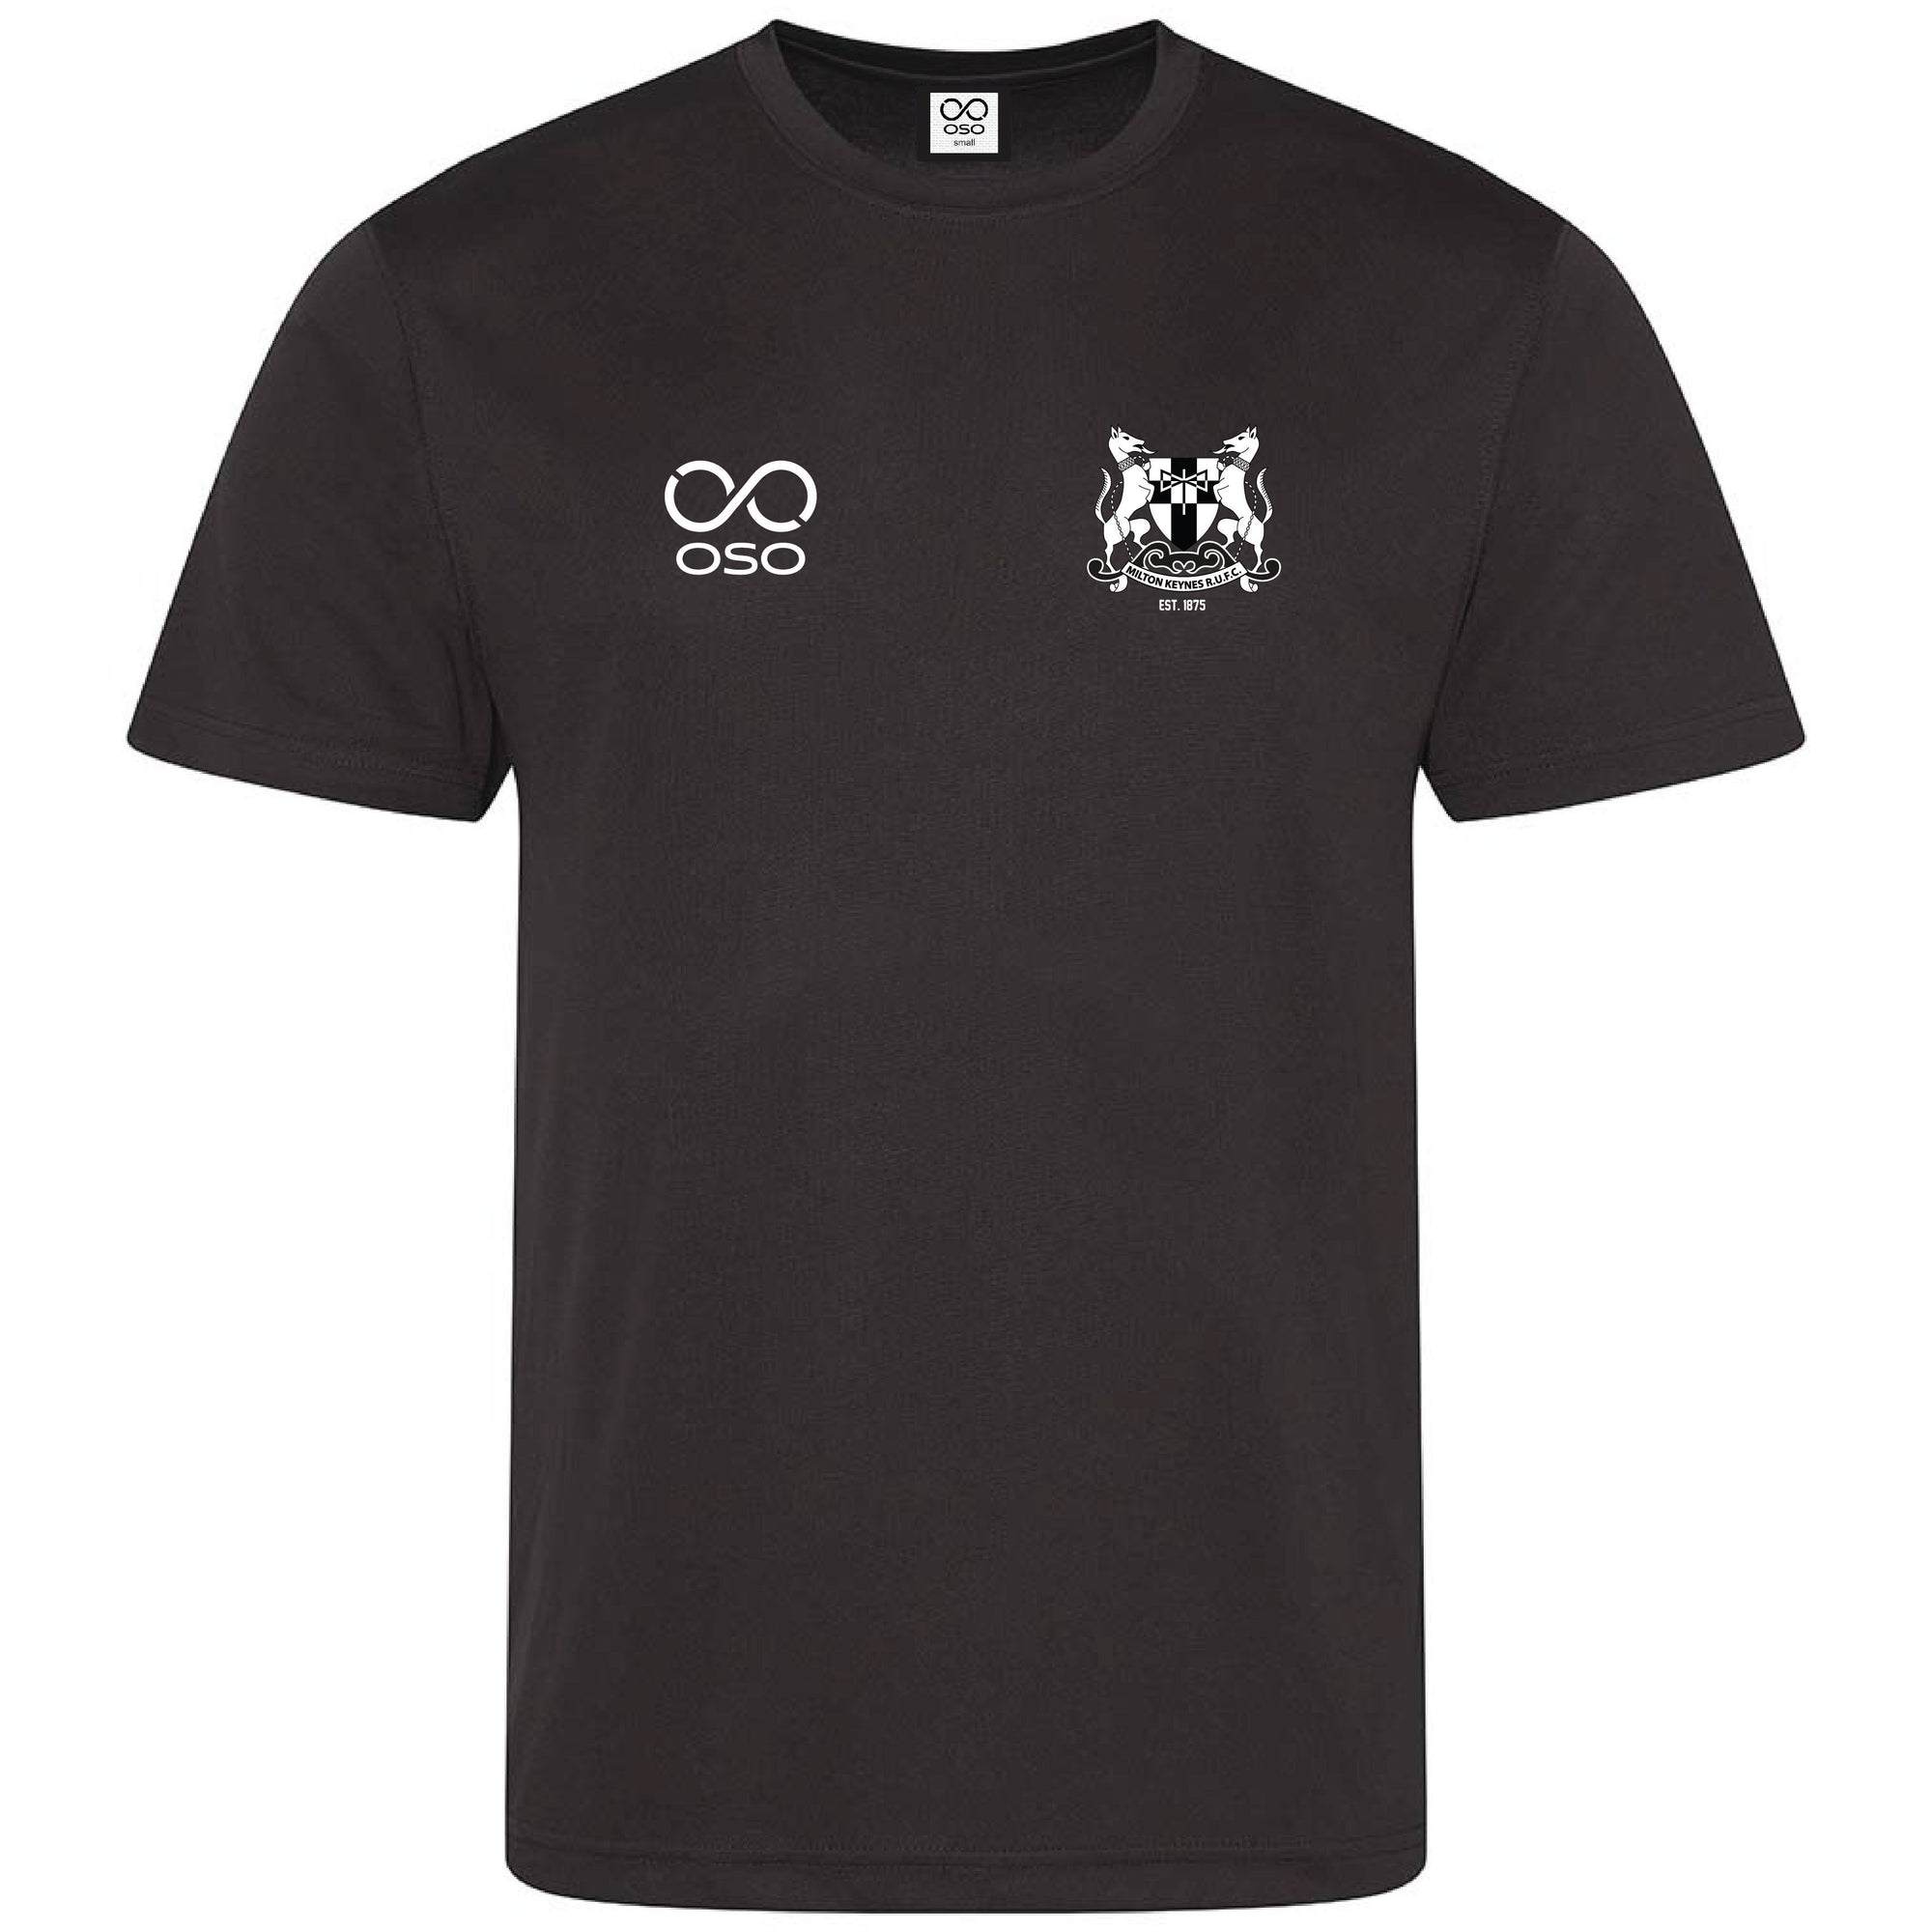 MKRUFC Sports T-shirt Ladies - Black